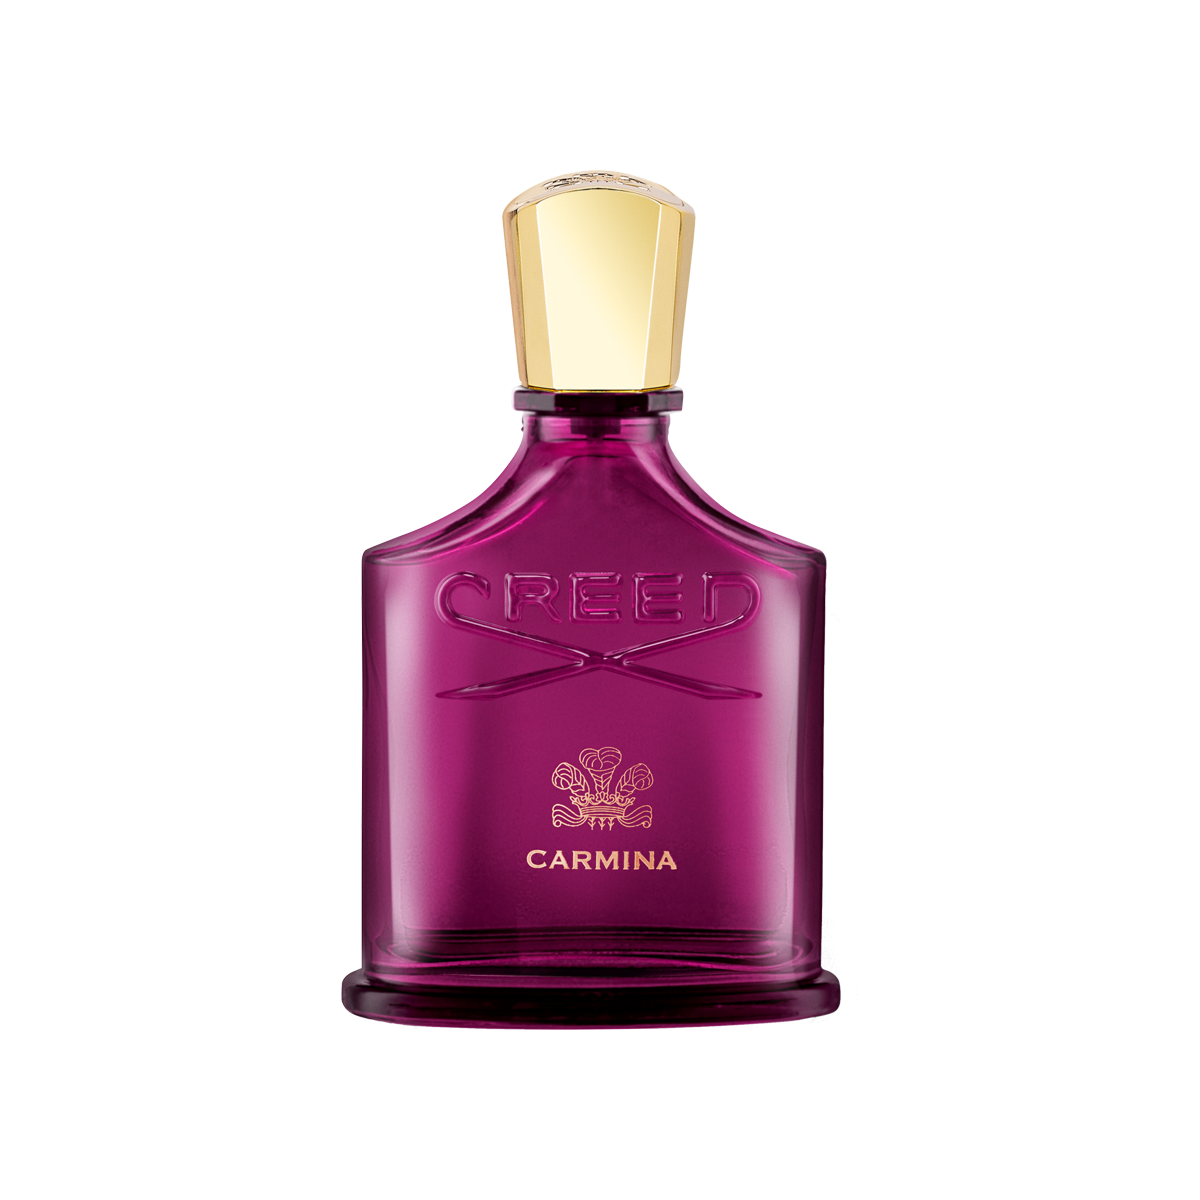 Creed - Carmina Eau de Parfum